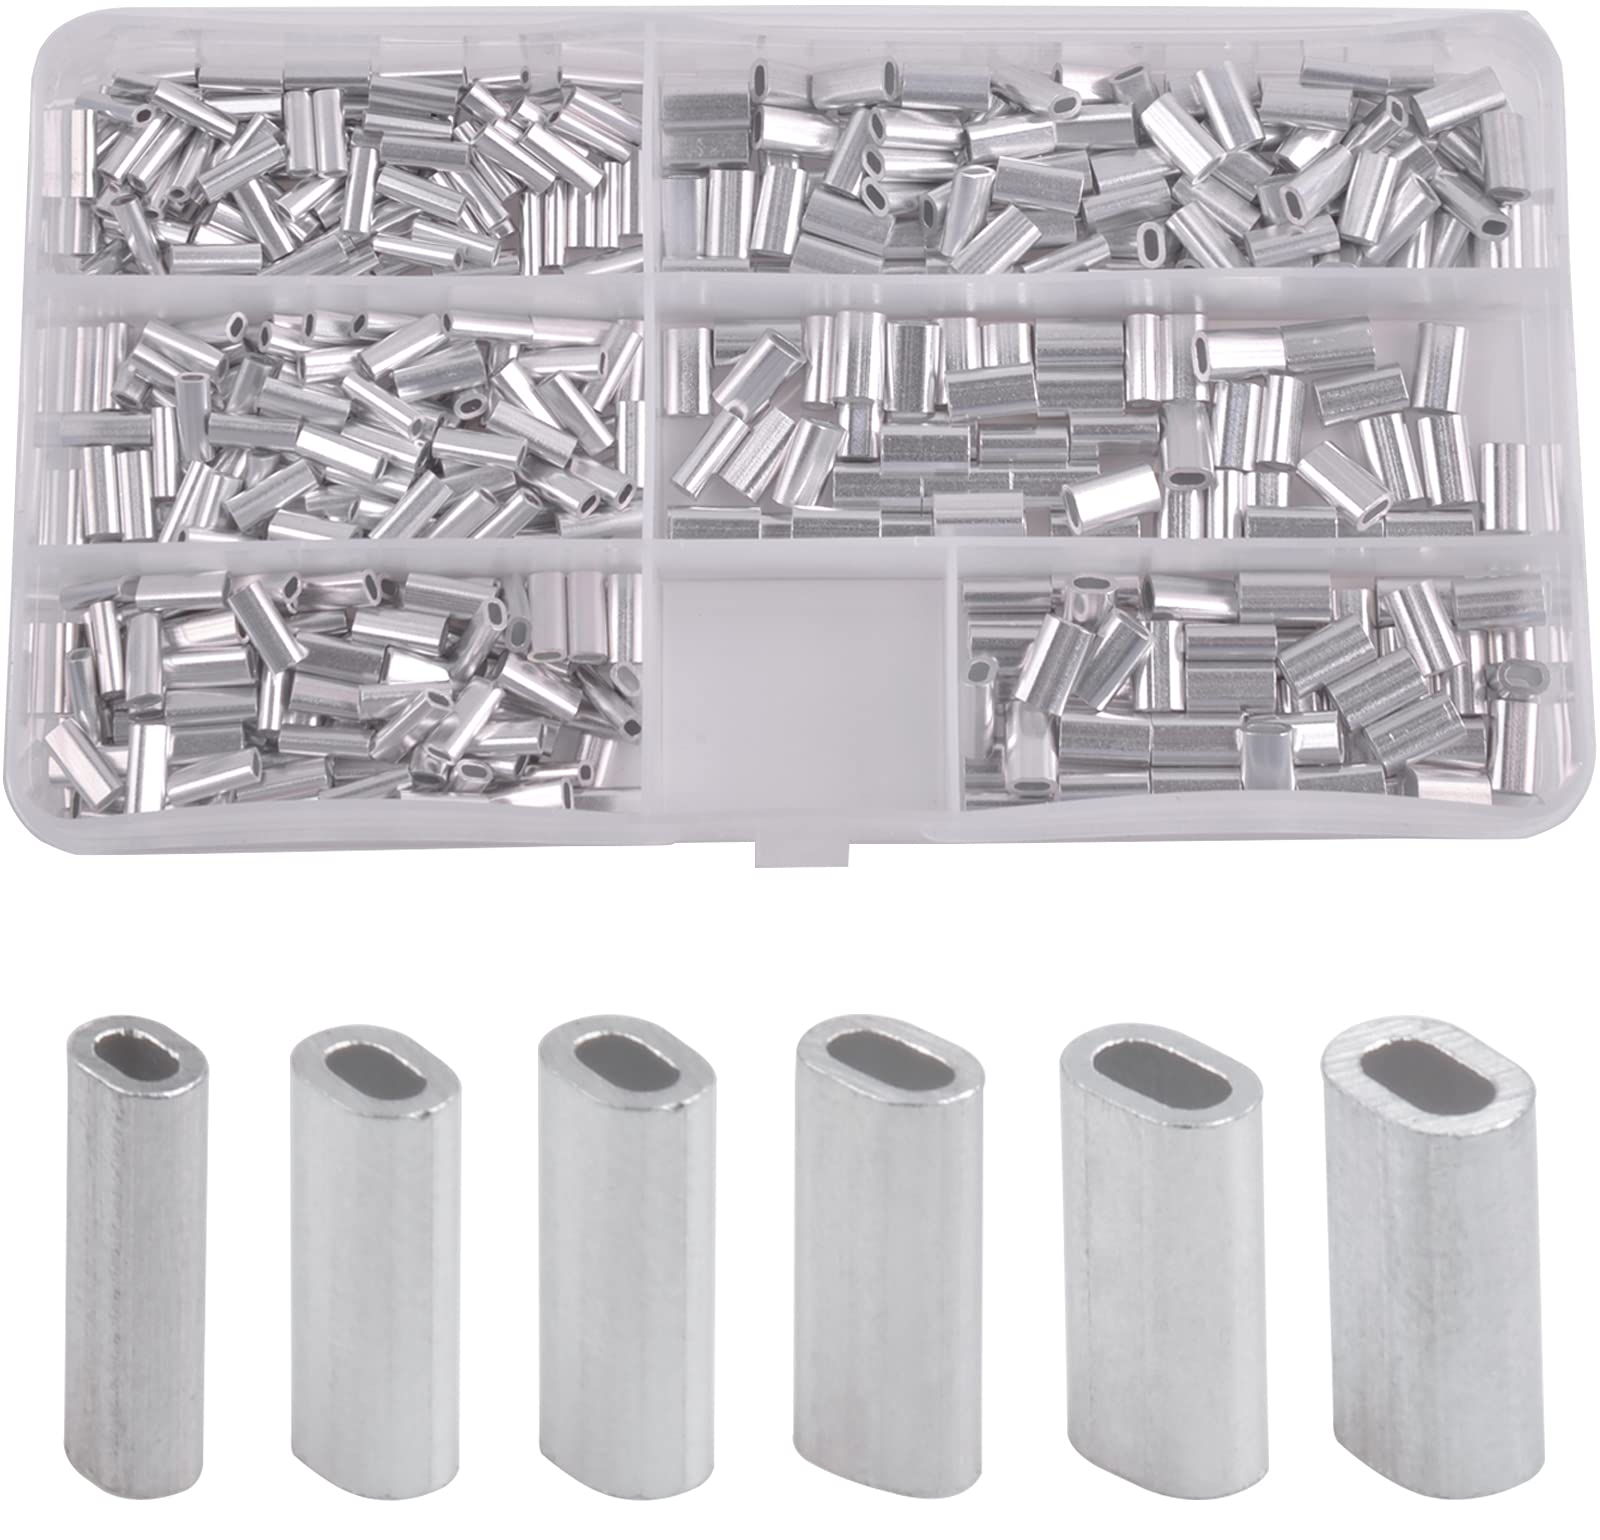 AGOOL Aluminum Single Barrel Crimp Sleeves Kit -500pcs Aluminum Crimping  Loop Sleeve Assortment Kit for Wire